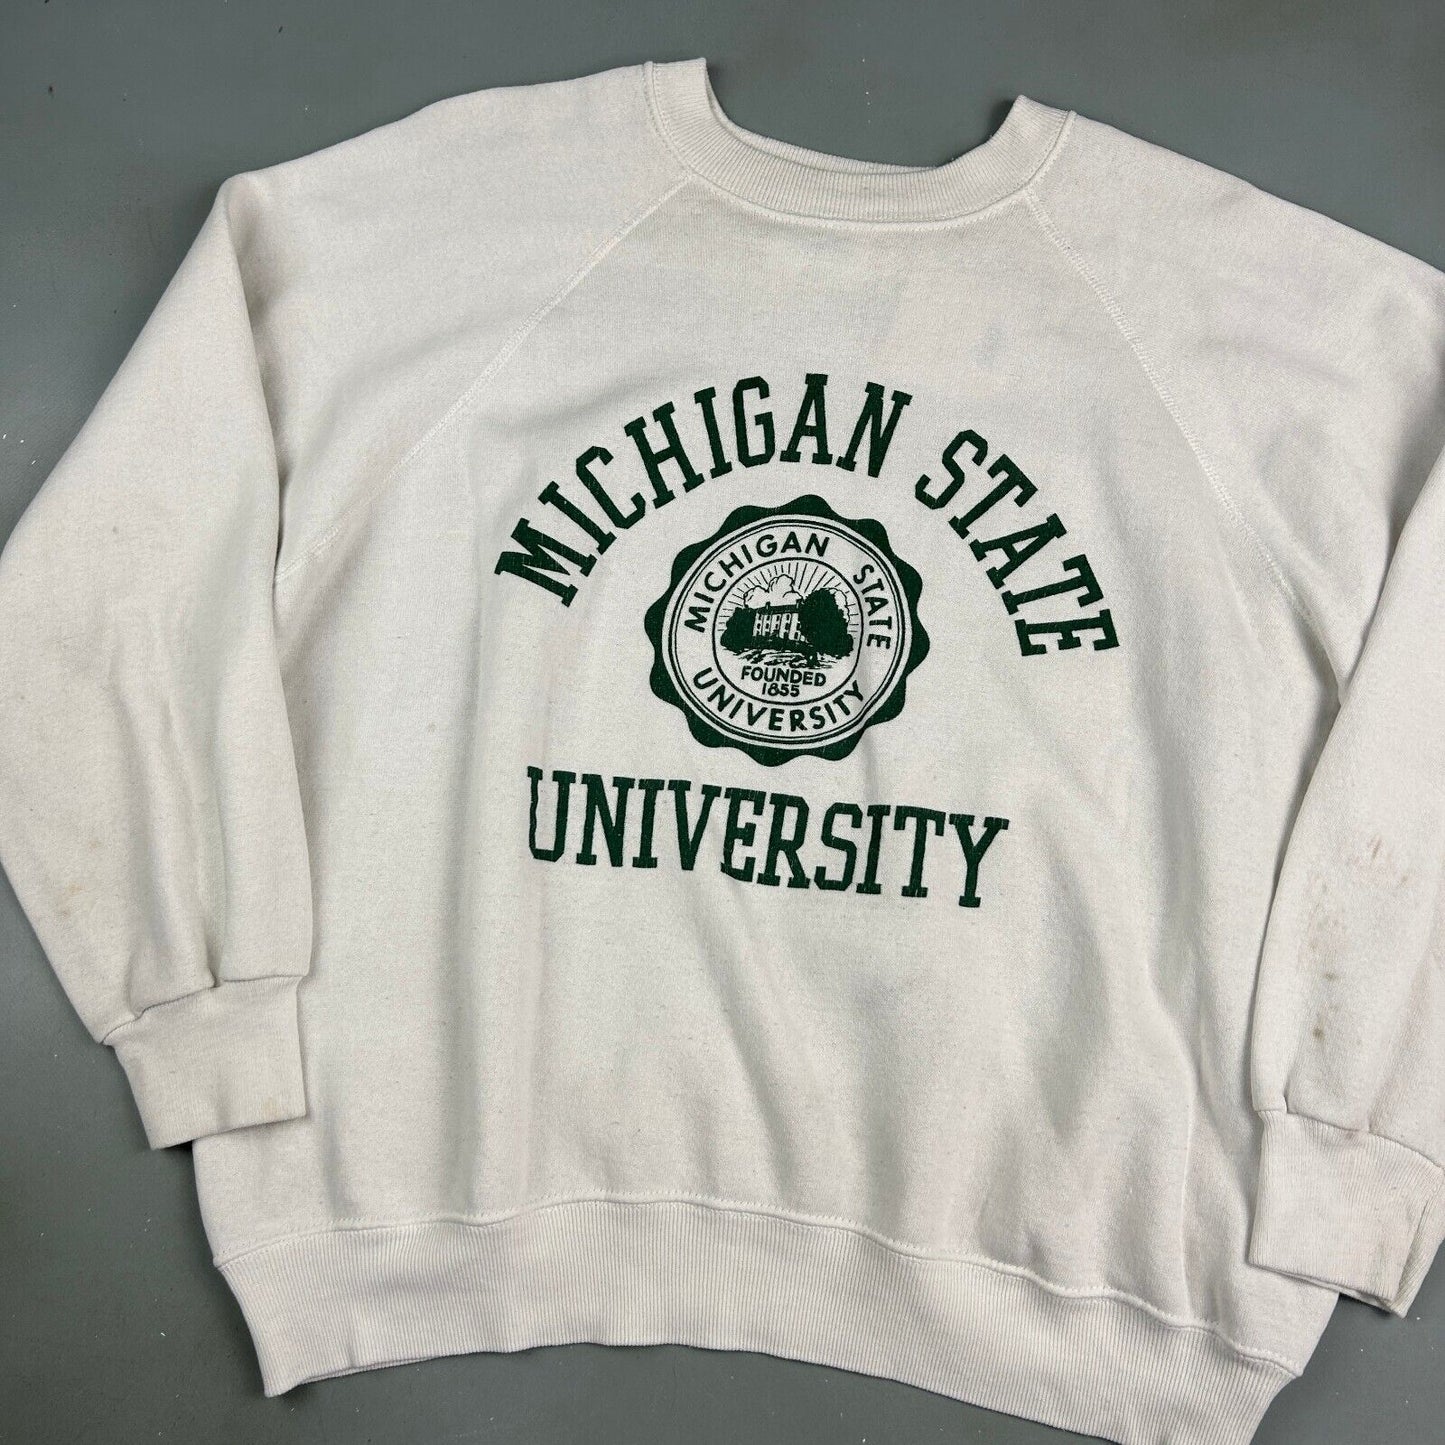 VINTAGE 80s Michigan State University White Crewneck Sweater sz XL Adult